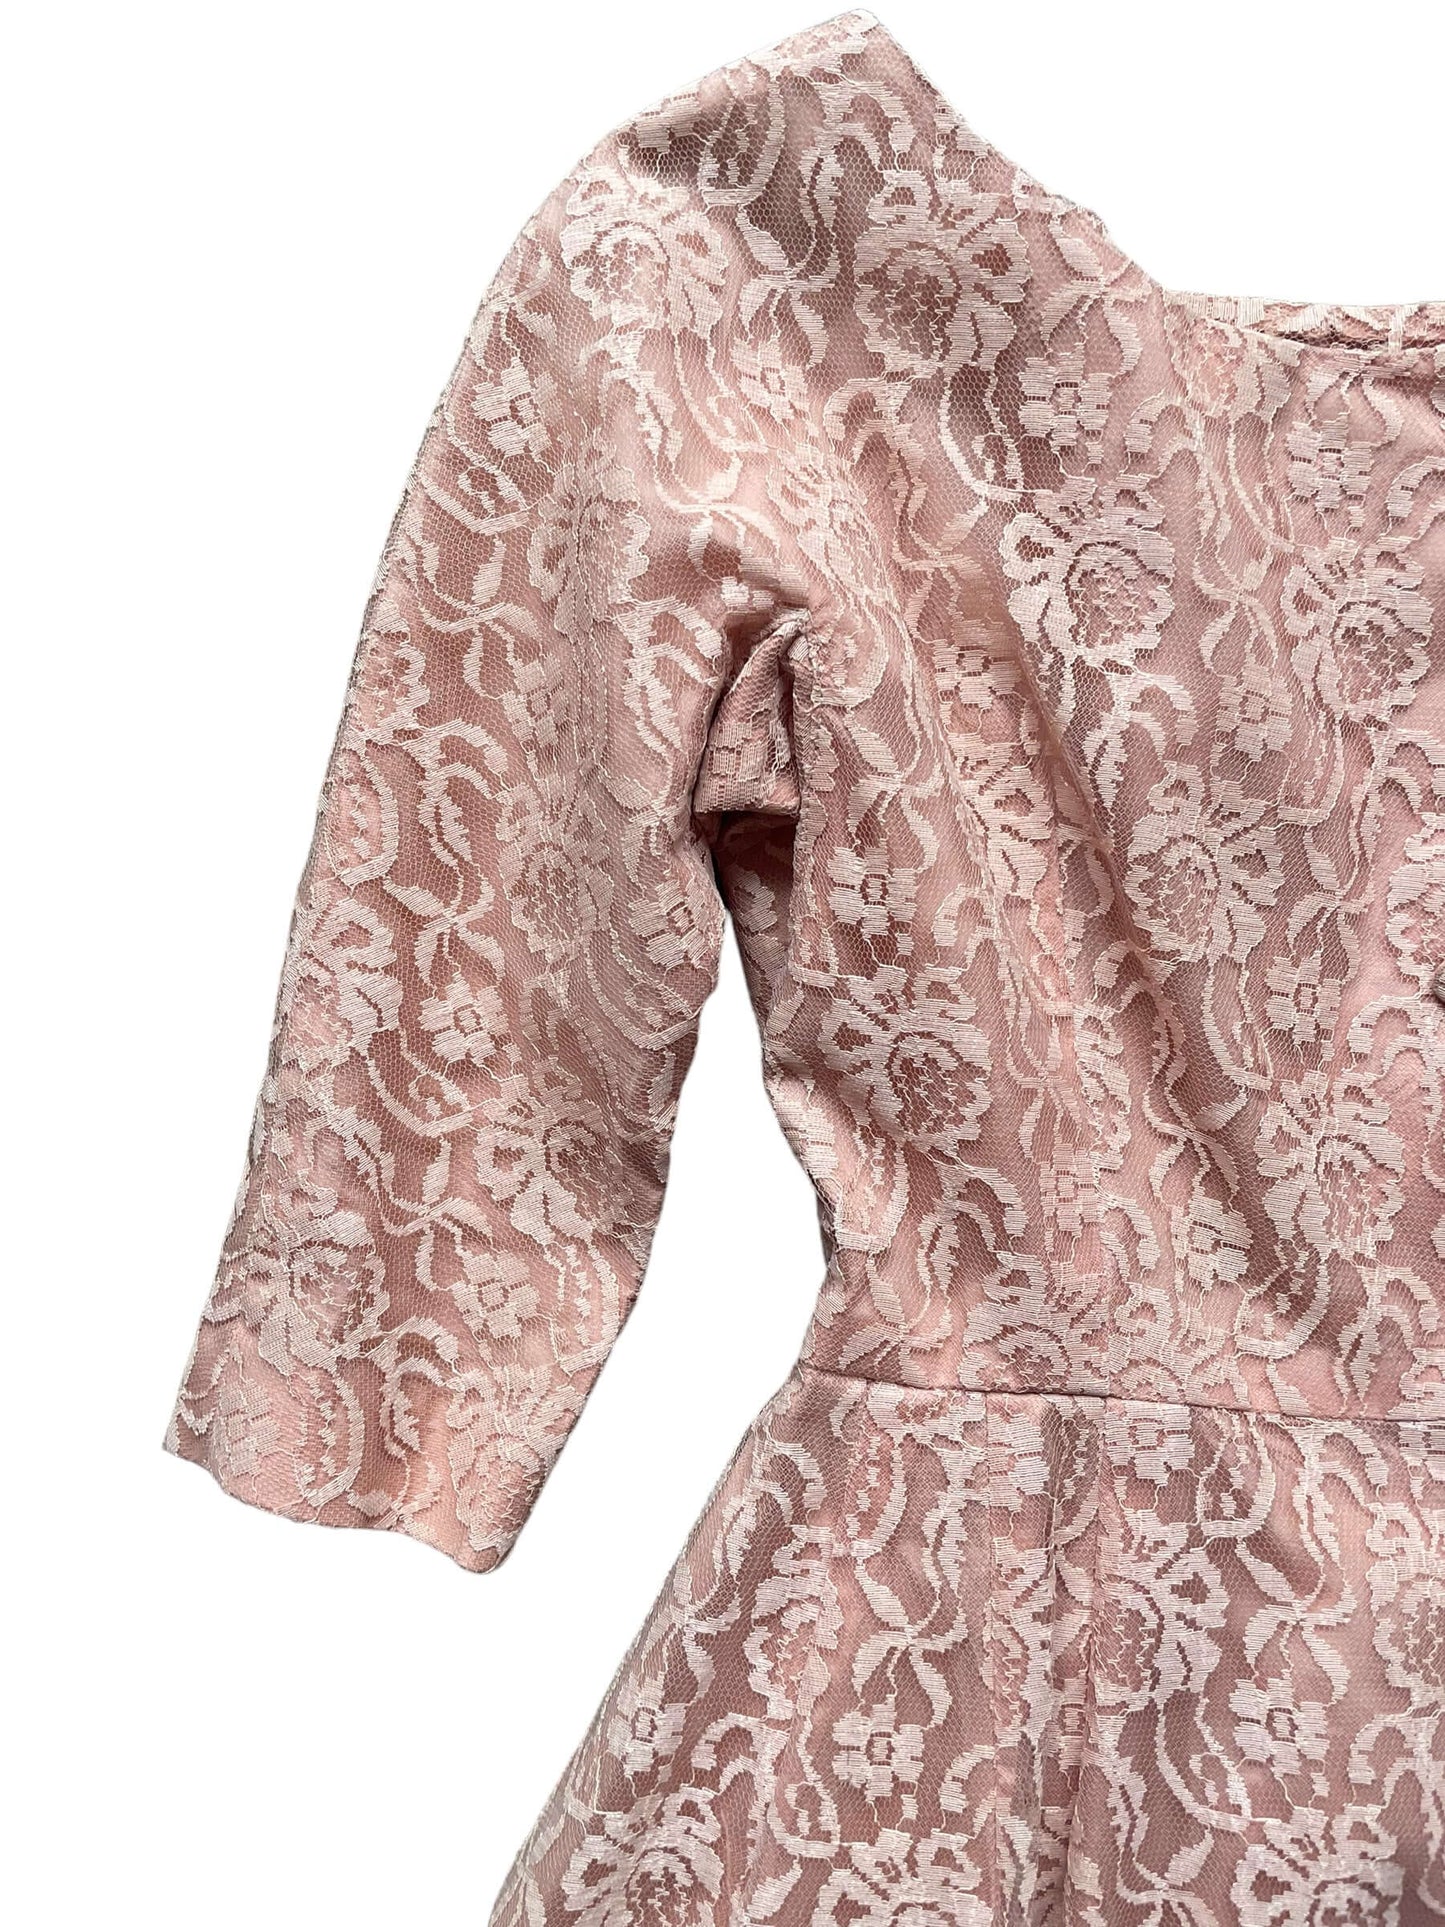 Front right shoulder view of Vintage 1950s Handmade Pink Lace Formal Dress |  Barn Owl Vintage Dresses | Seattle Vintage Ladies Clothing